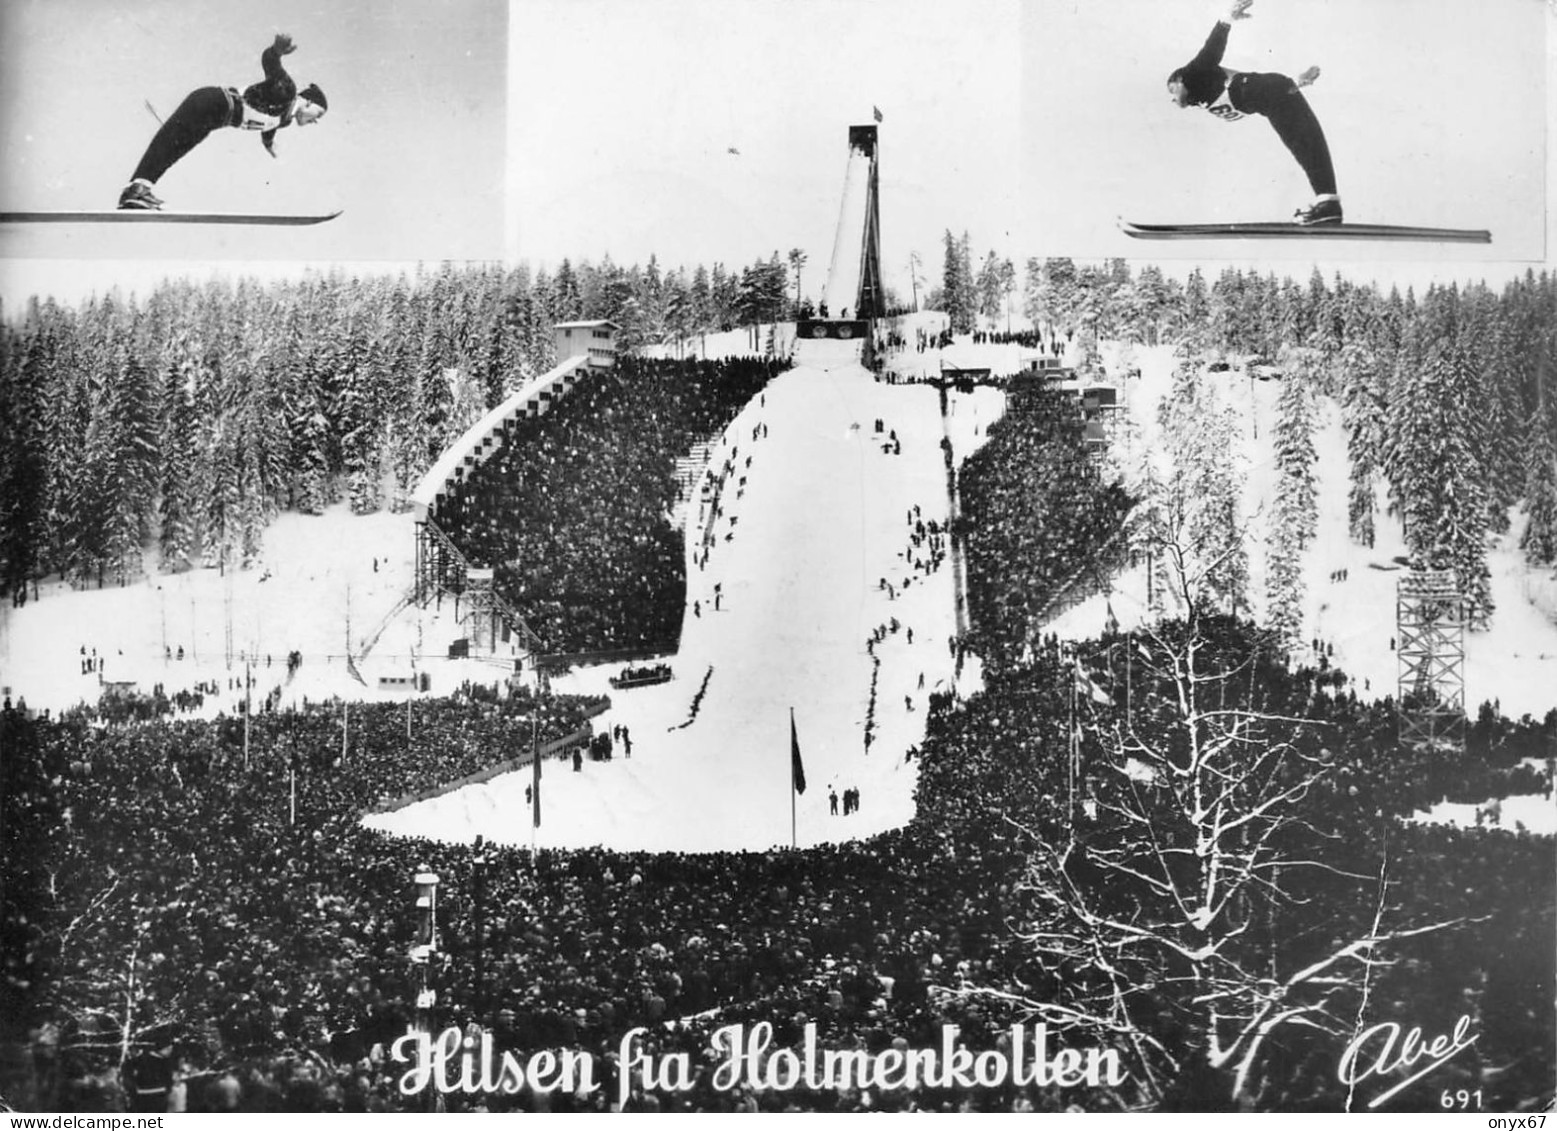 HILSEN Fra Holmenkollen-Norvège-Norge-Norway-Saut à Ski-Templin-Jeux Olympiques Hiver OSLO 1952-Cachet-Tampon-Stempel - Juegos Olímpicos